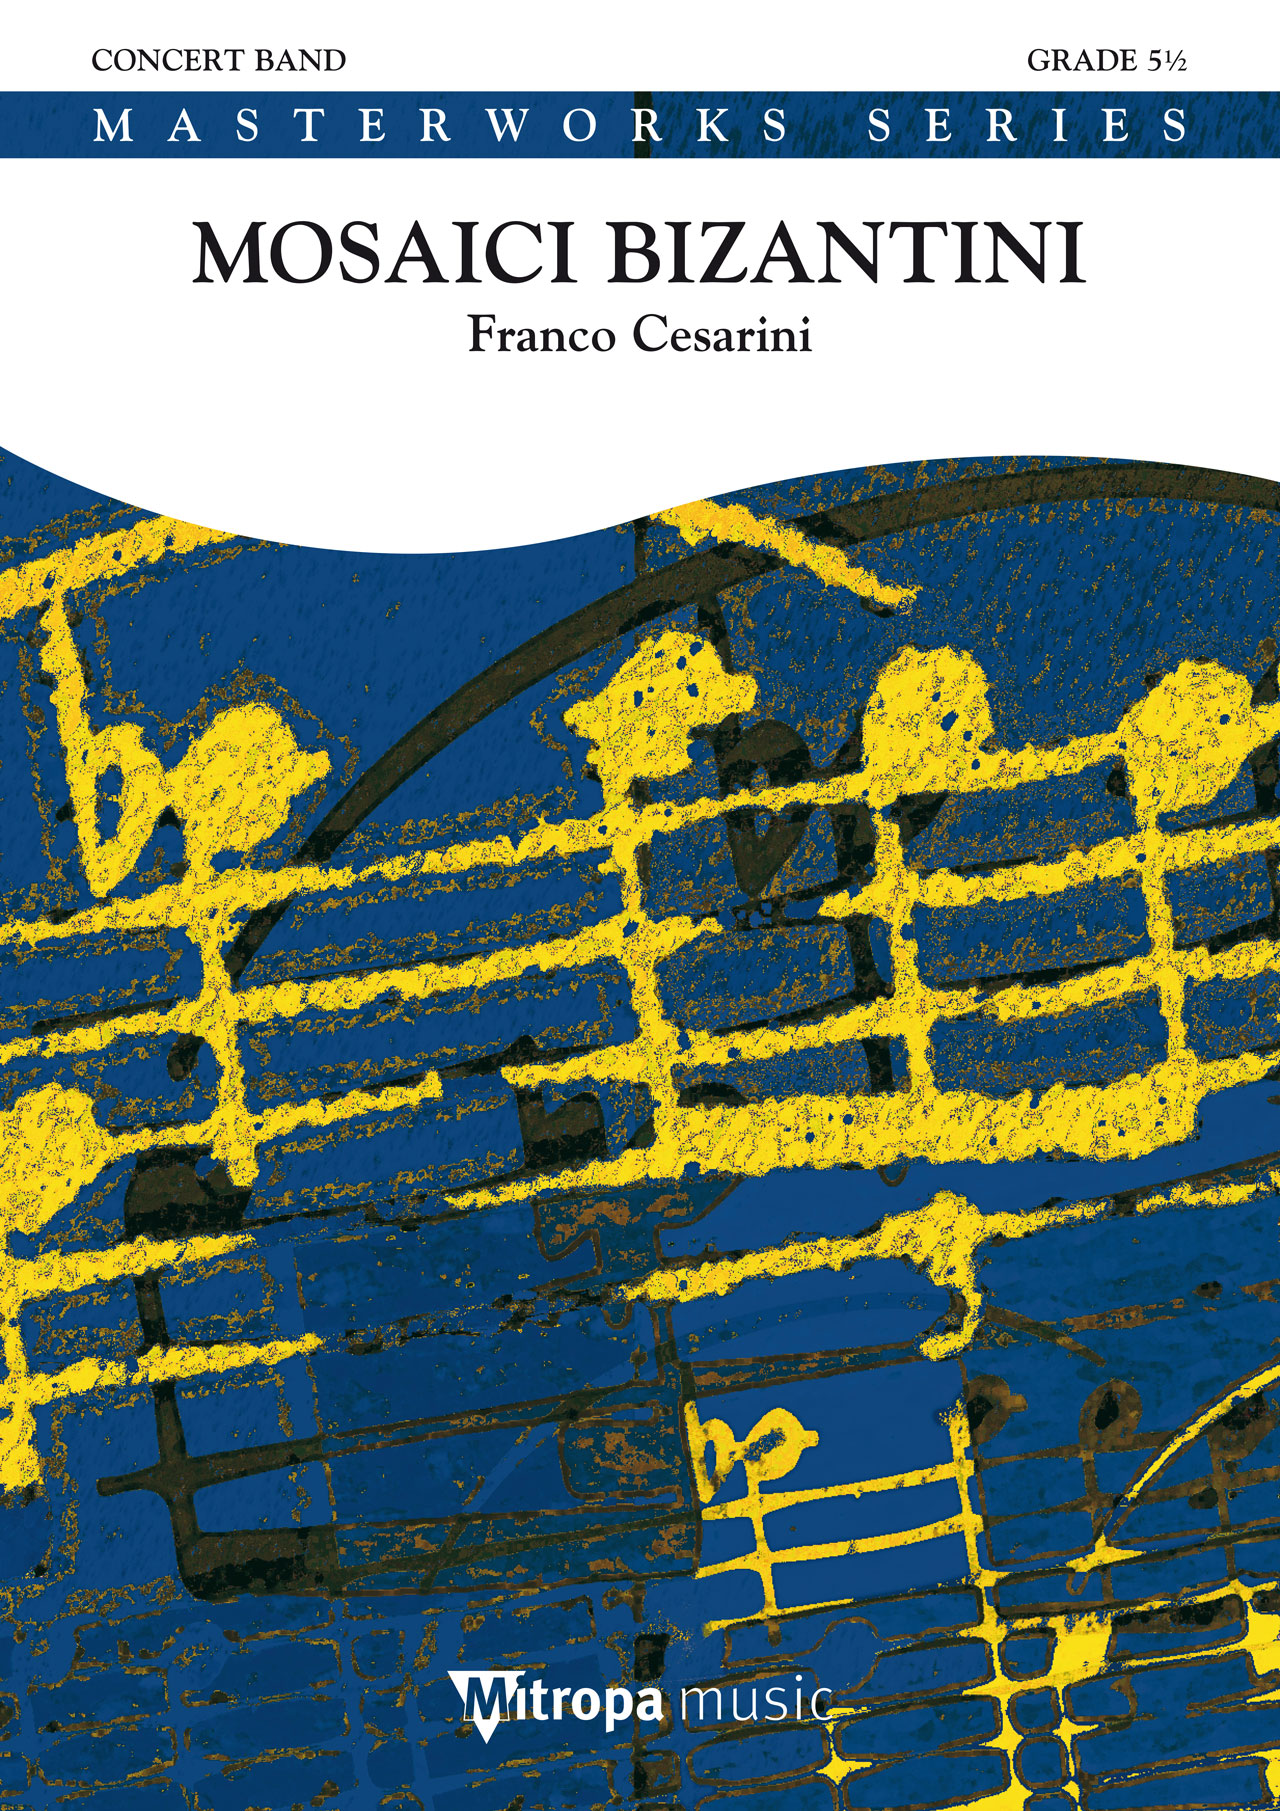 Franco Cesarini: Mosaici Bizantini: Concert Band: Score